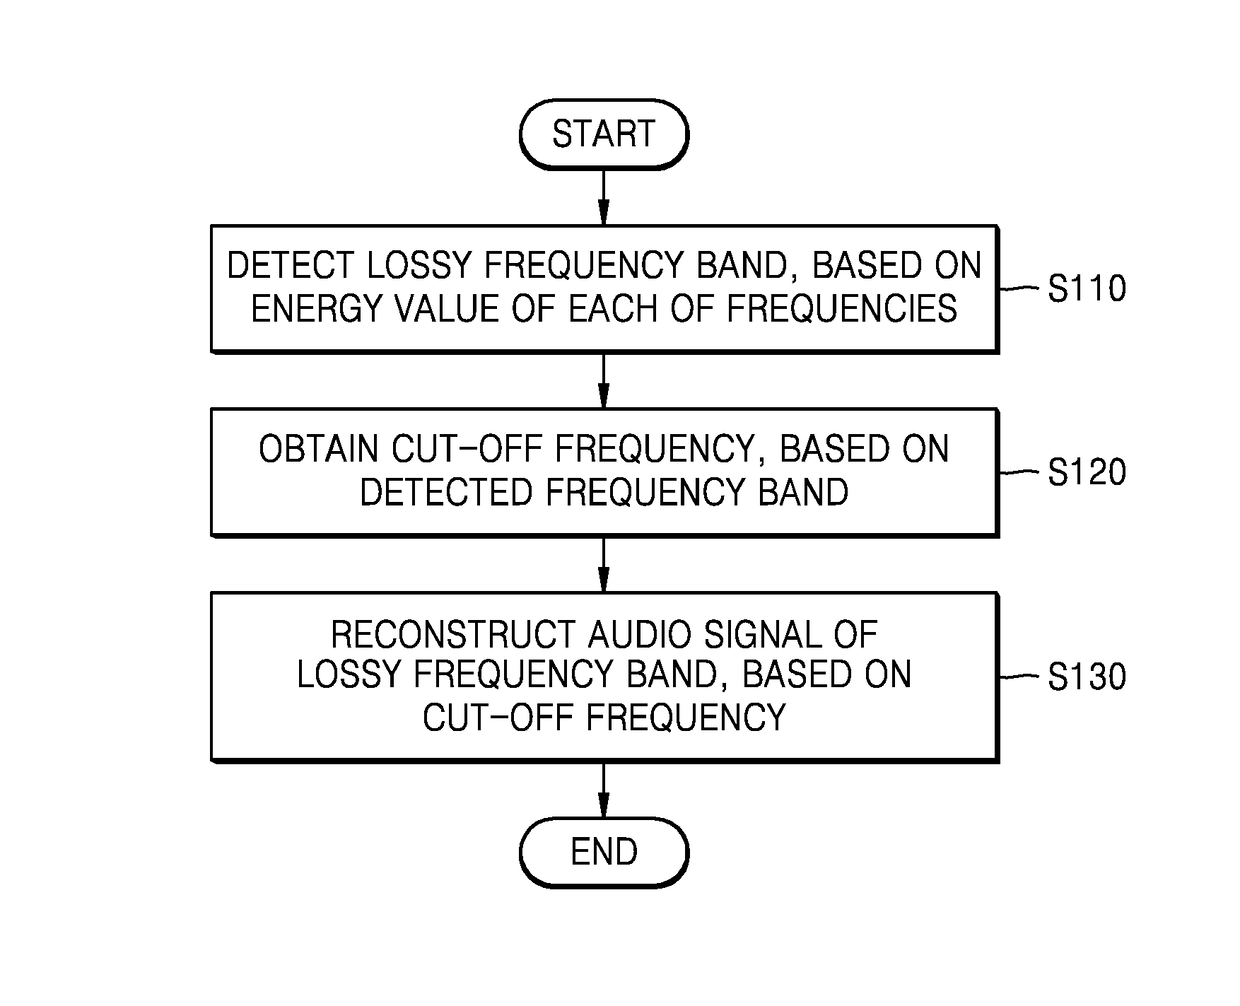 Method and apparatus for restoring audio signal